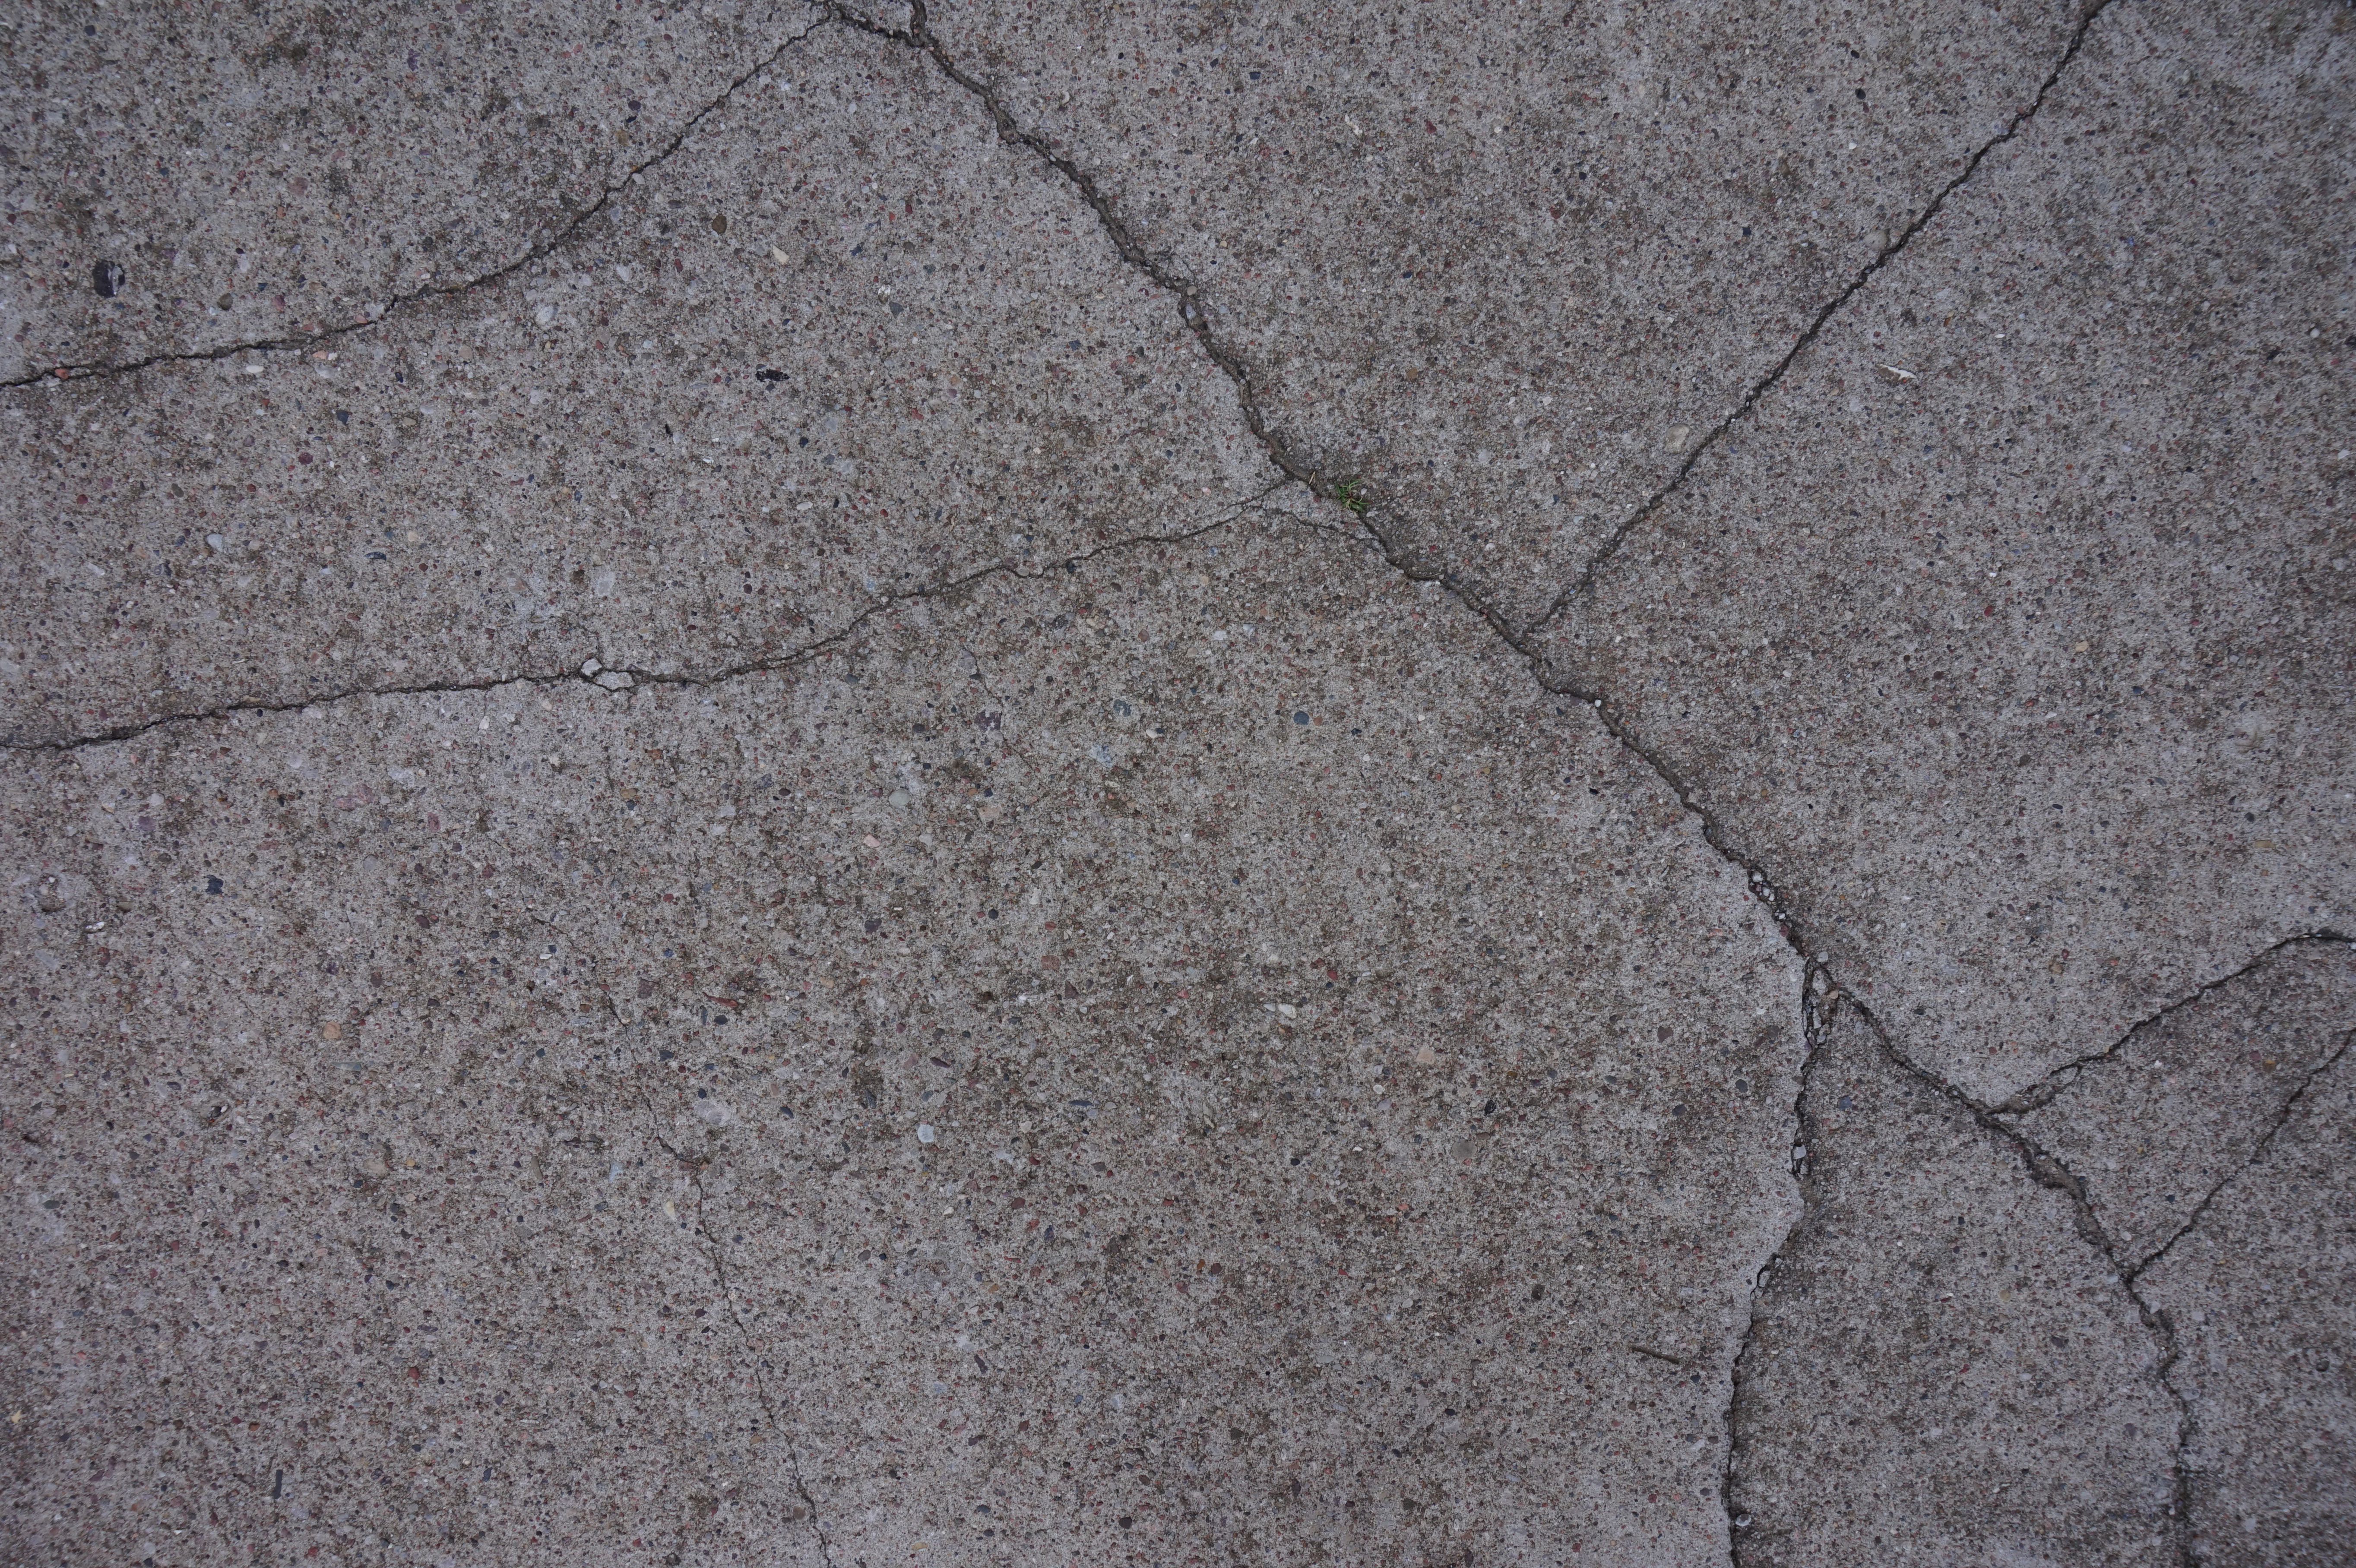 Old cracked concrete floor - Concrete - Texturify - Free textures